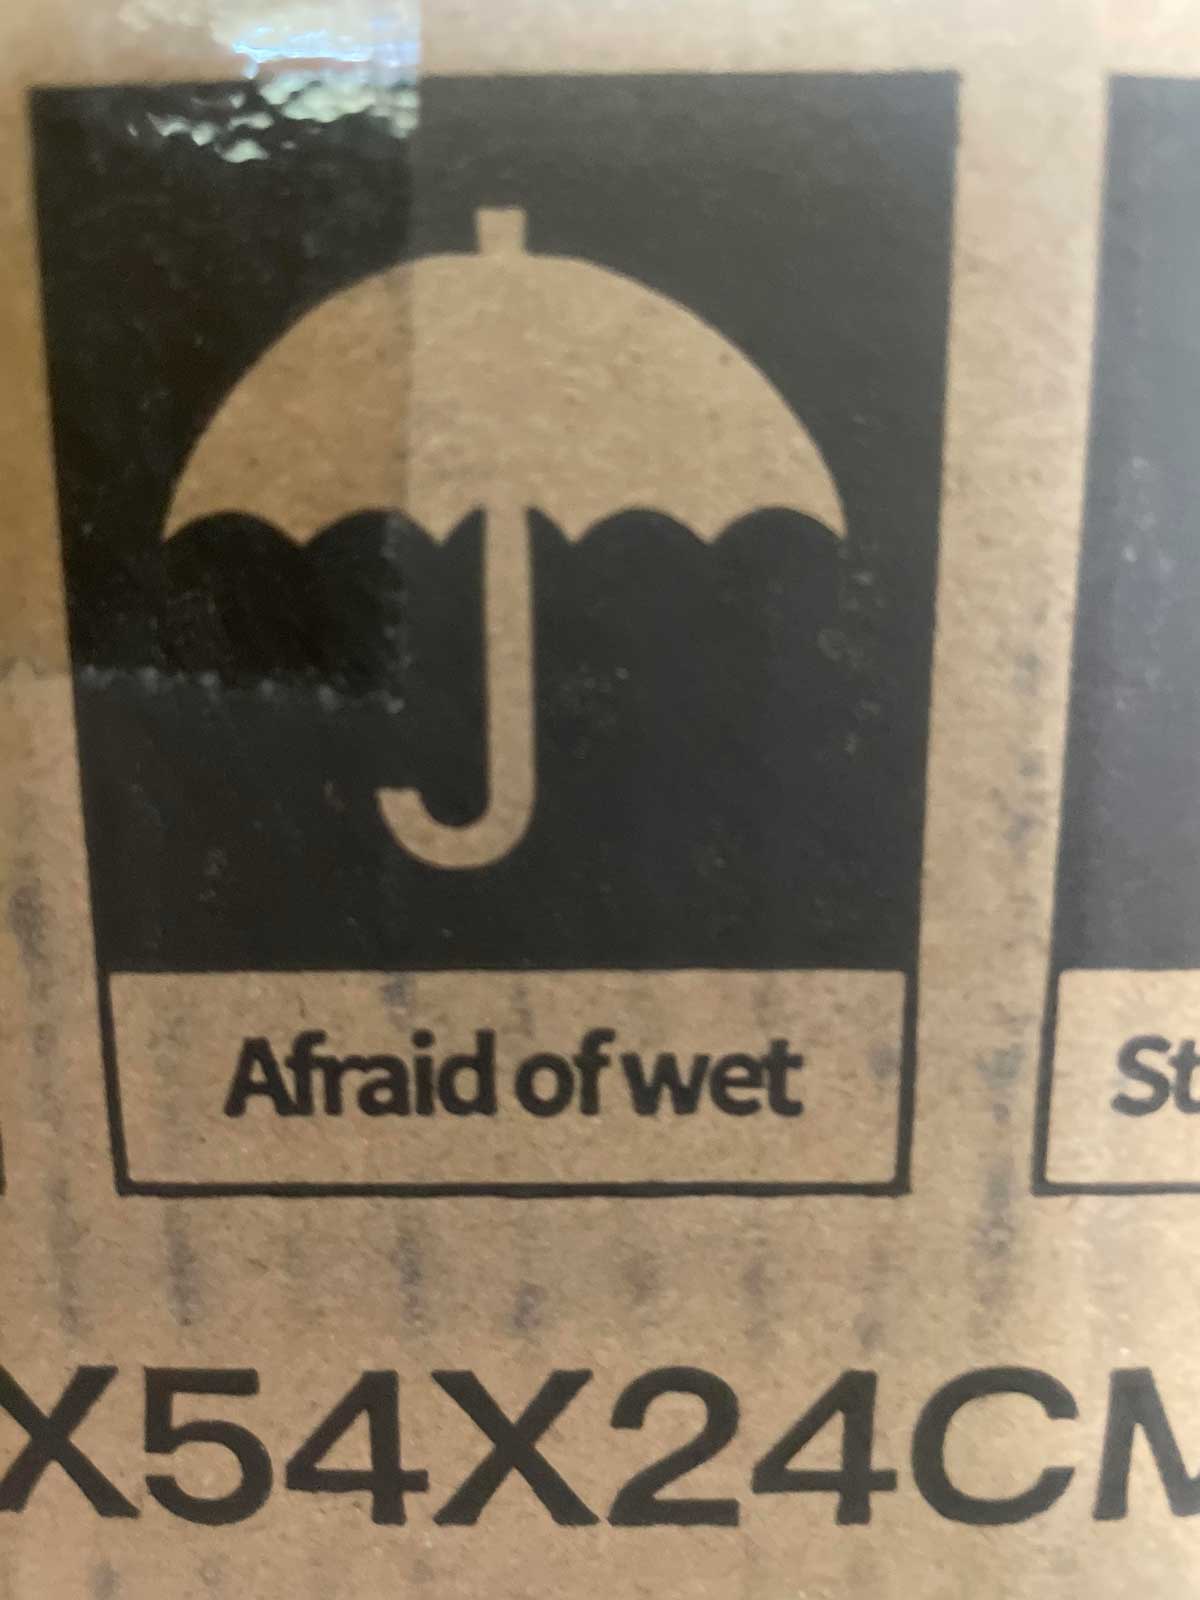 Afraid of wet